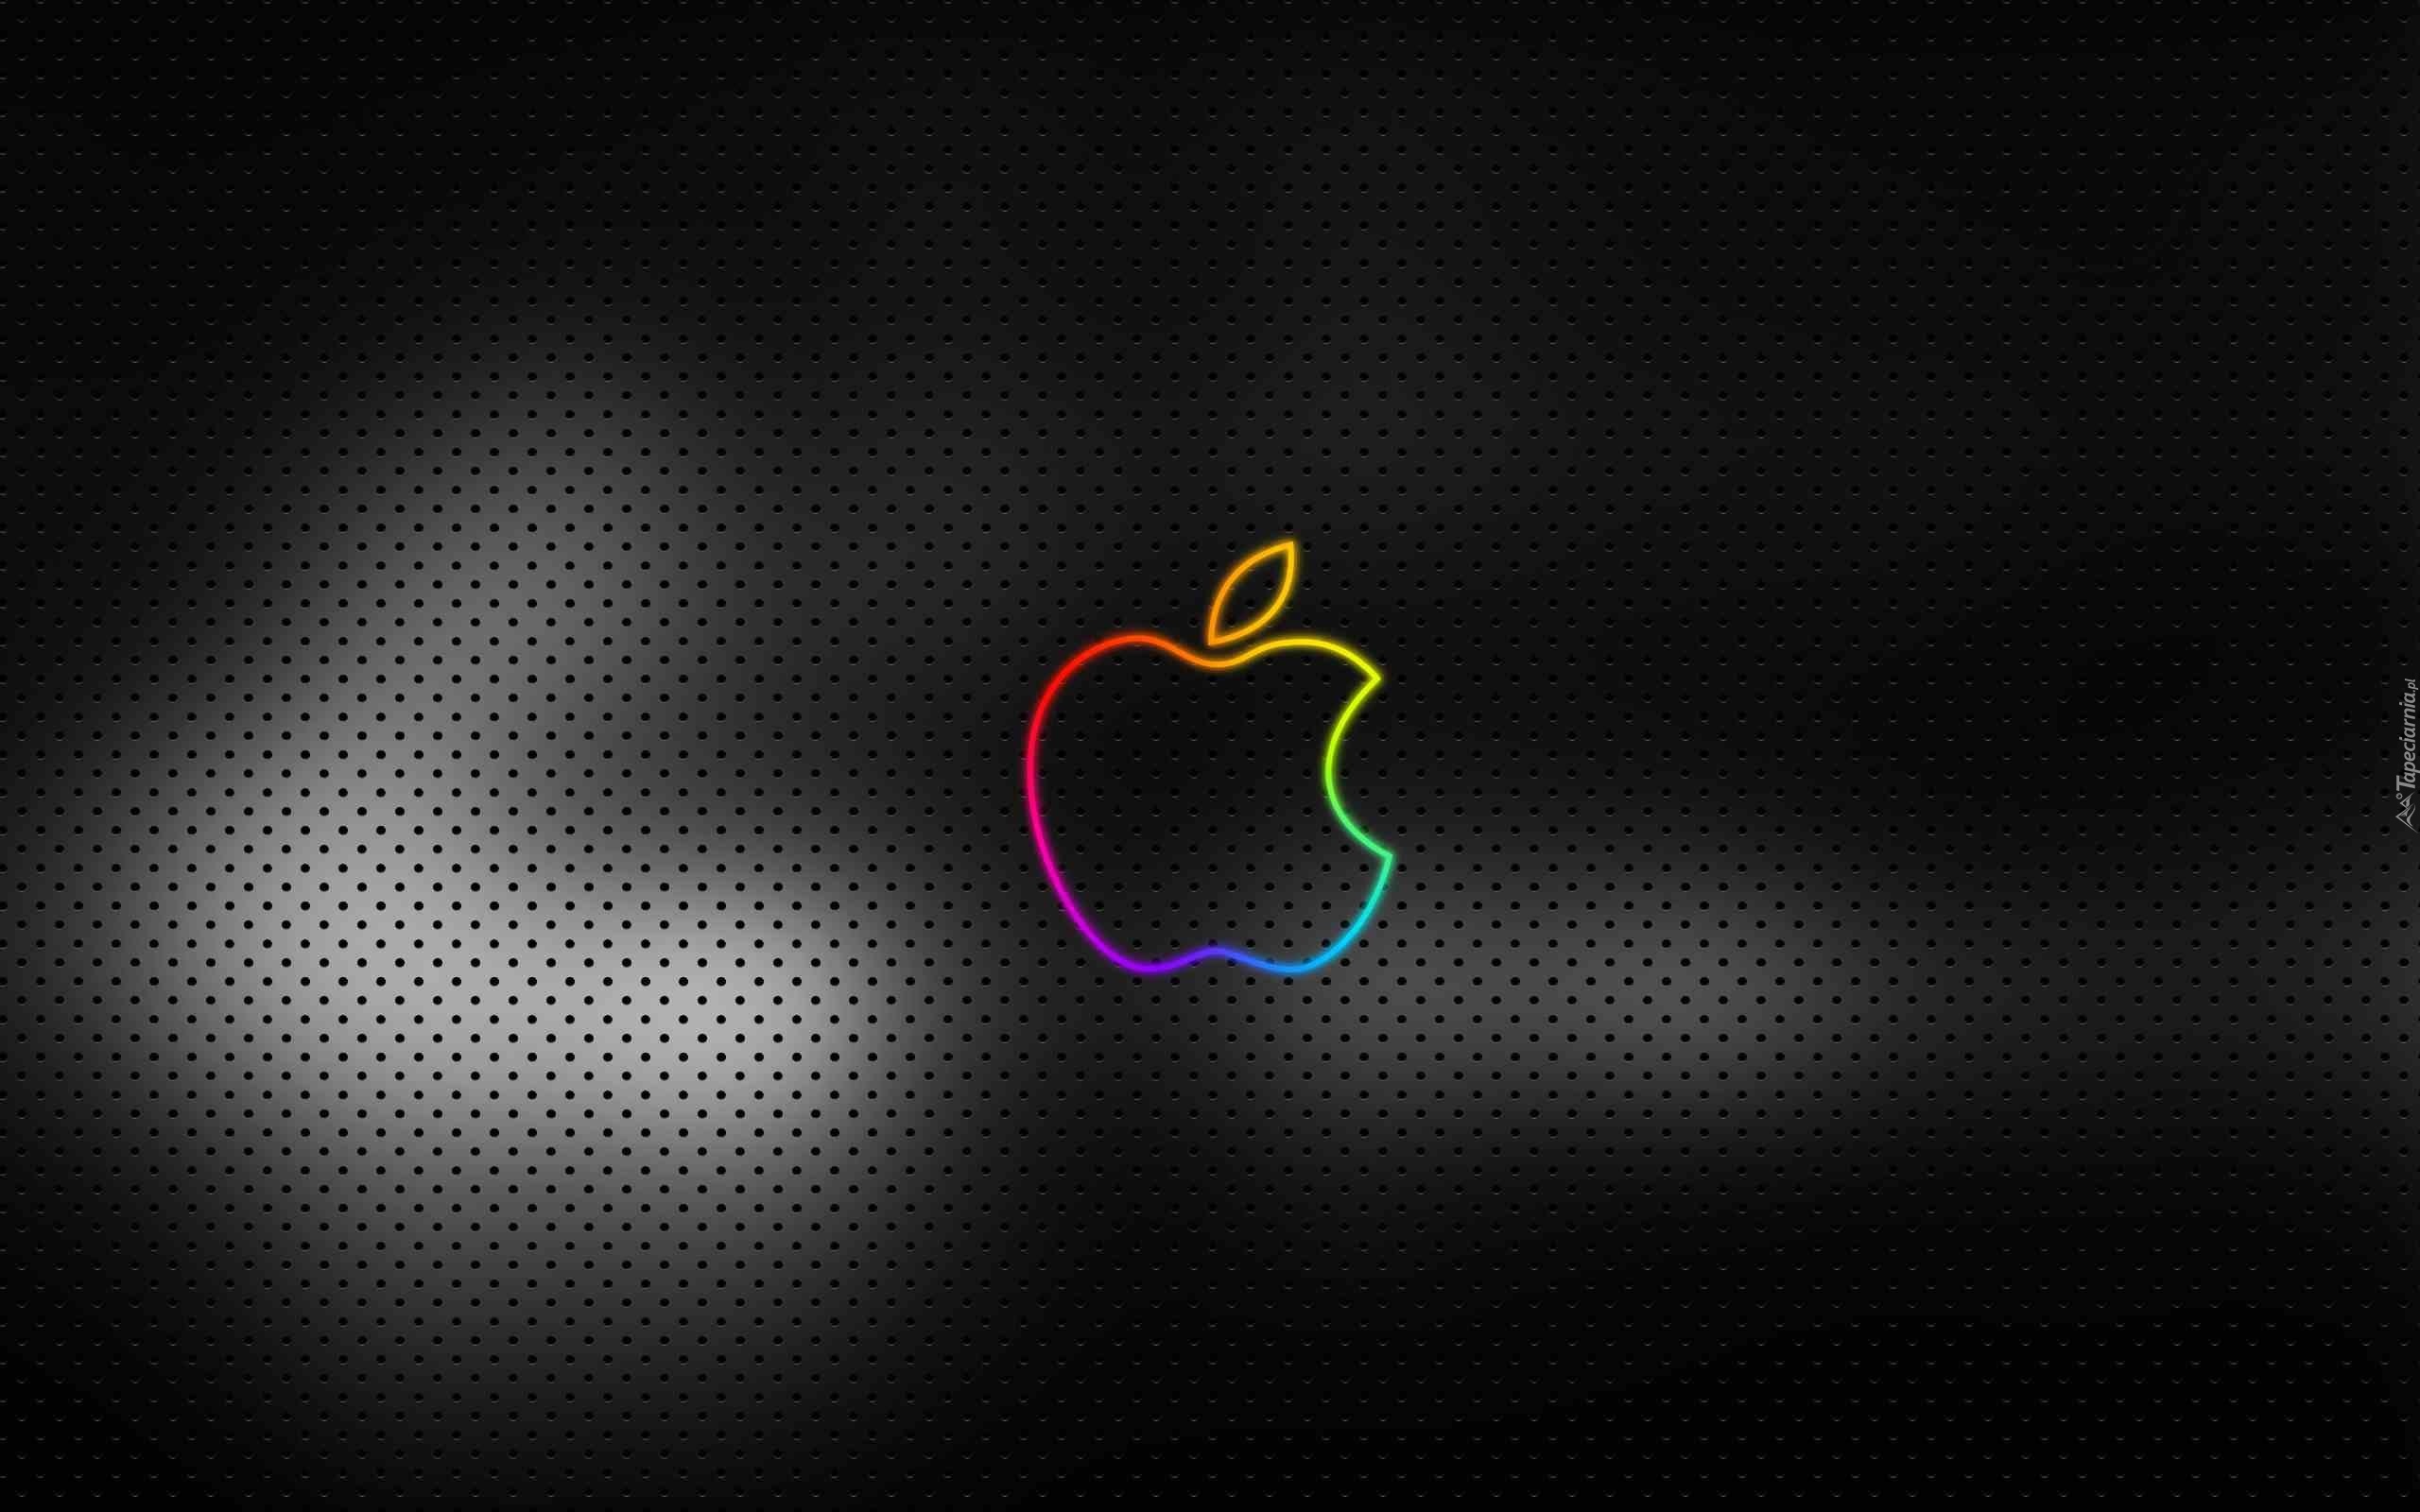 Apple, iMac